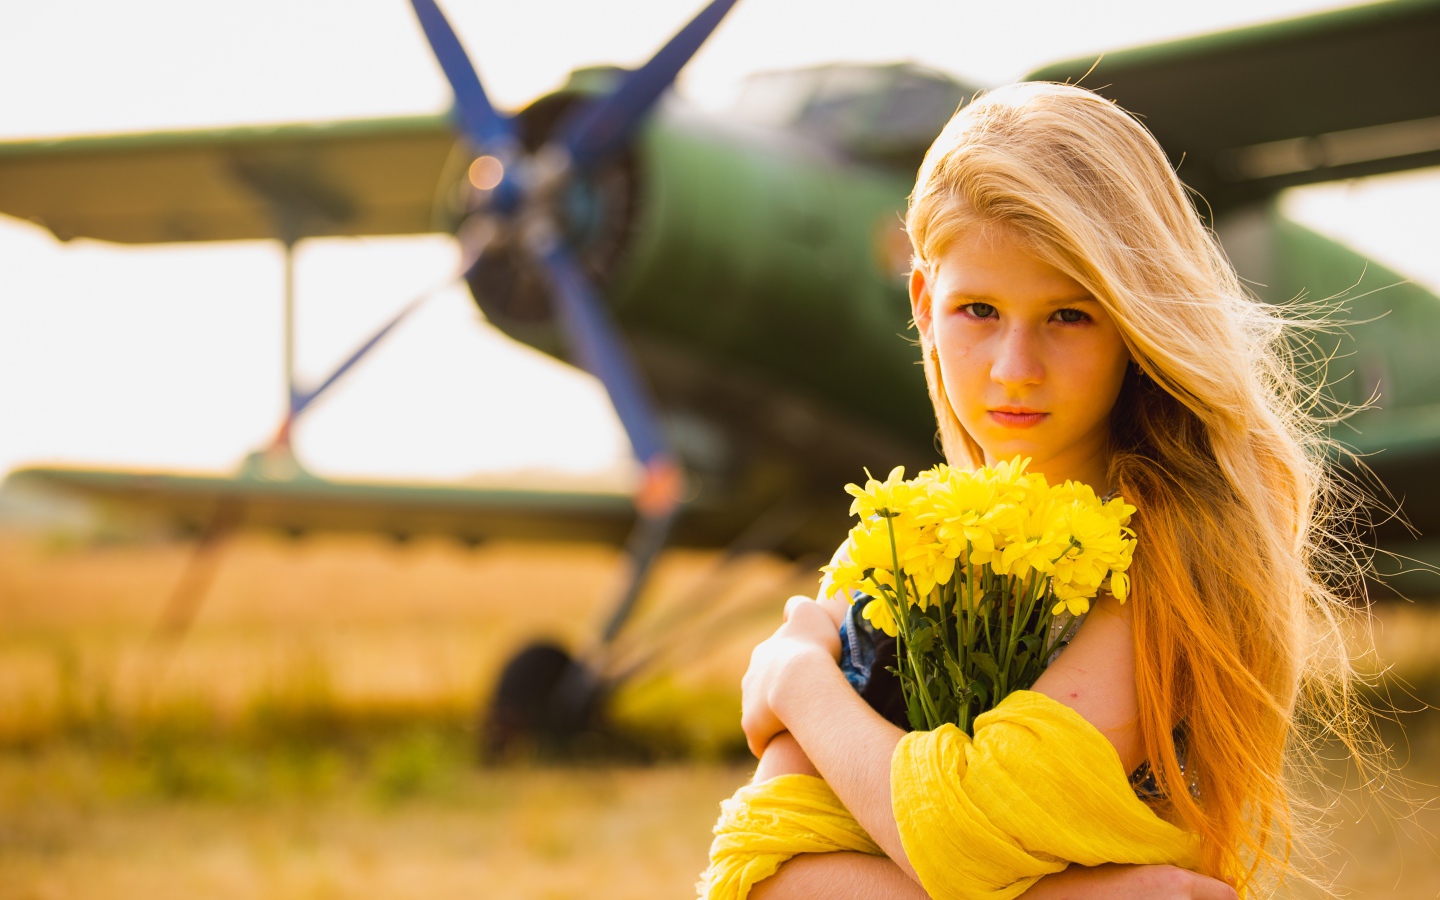 Девочка с букетом желтых хризантем у самолета 